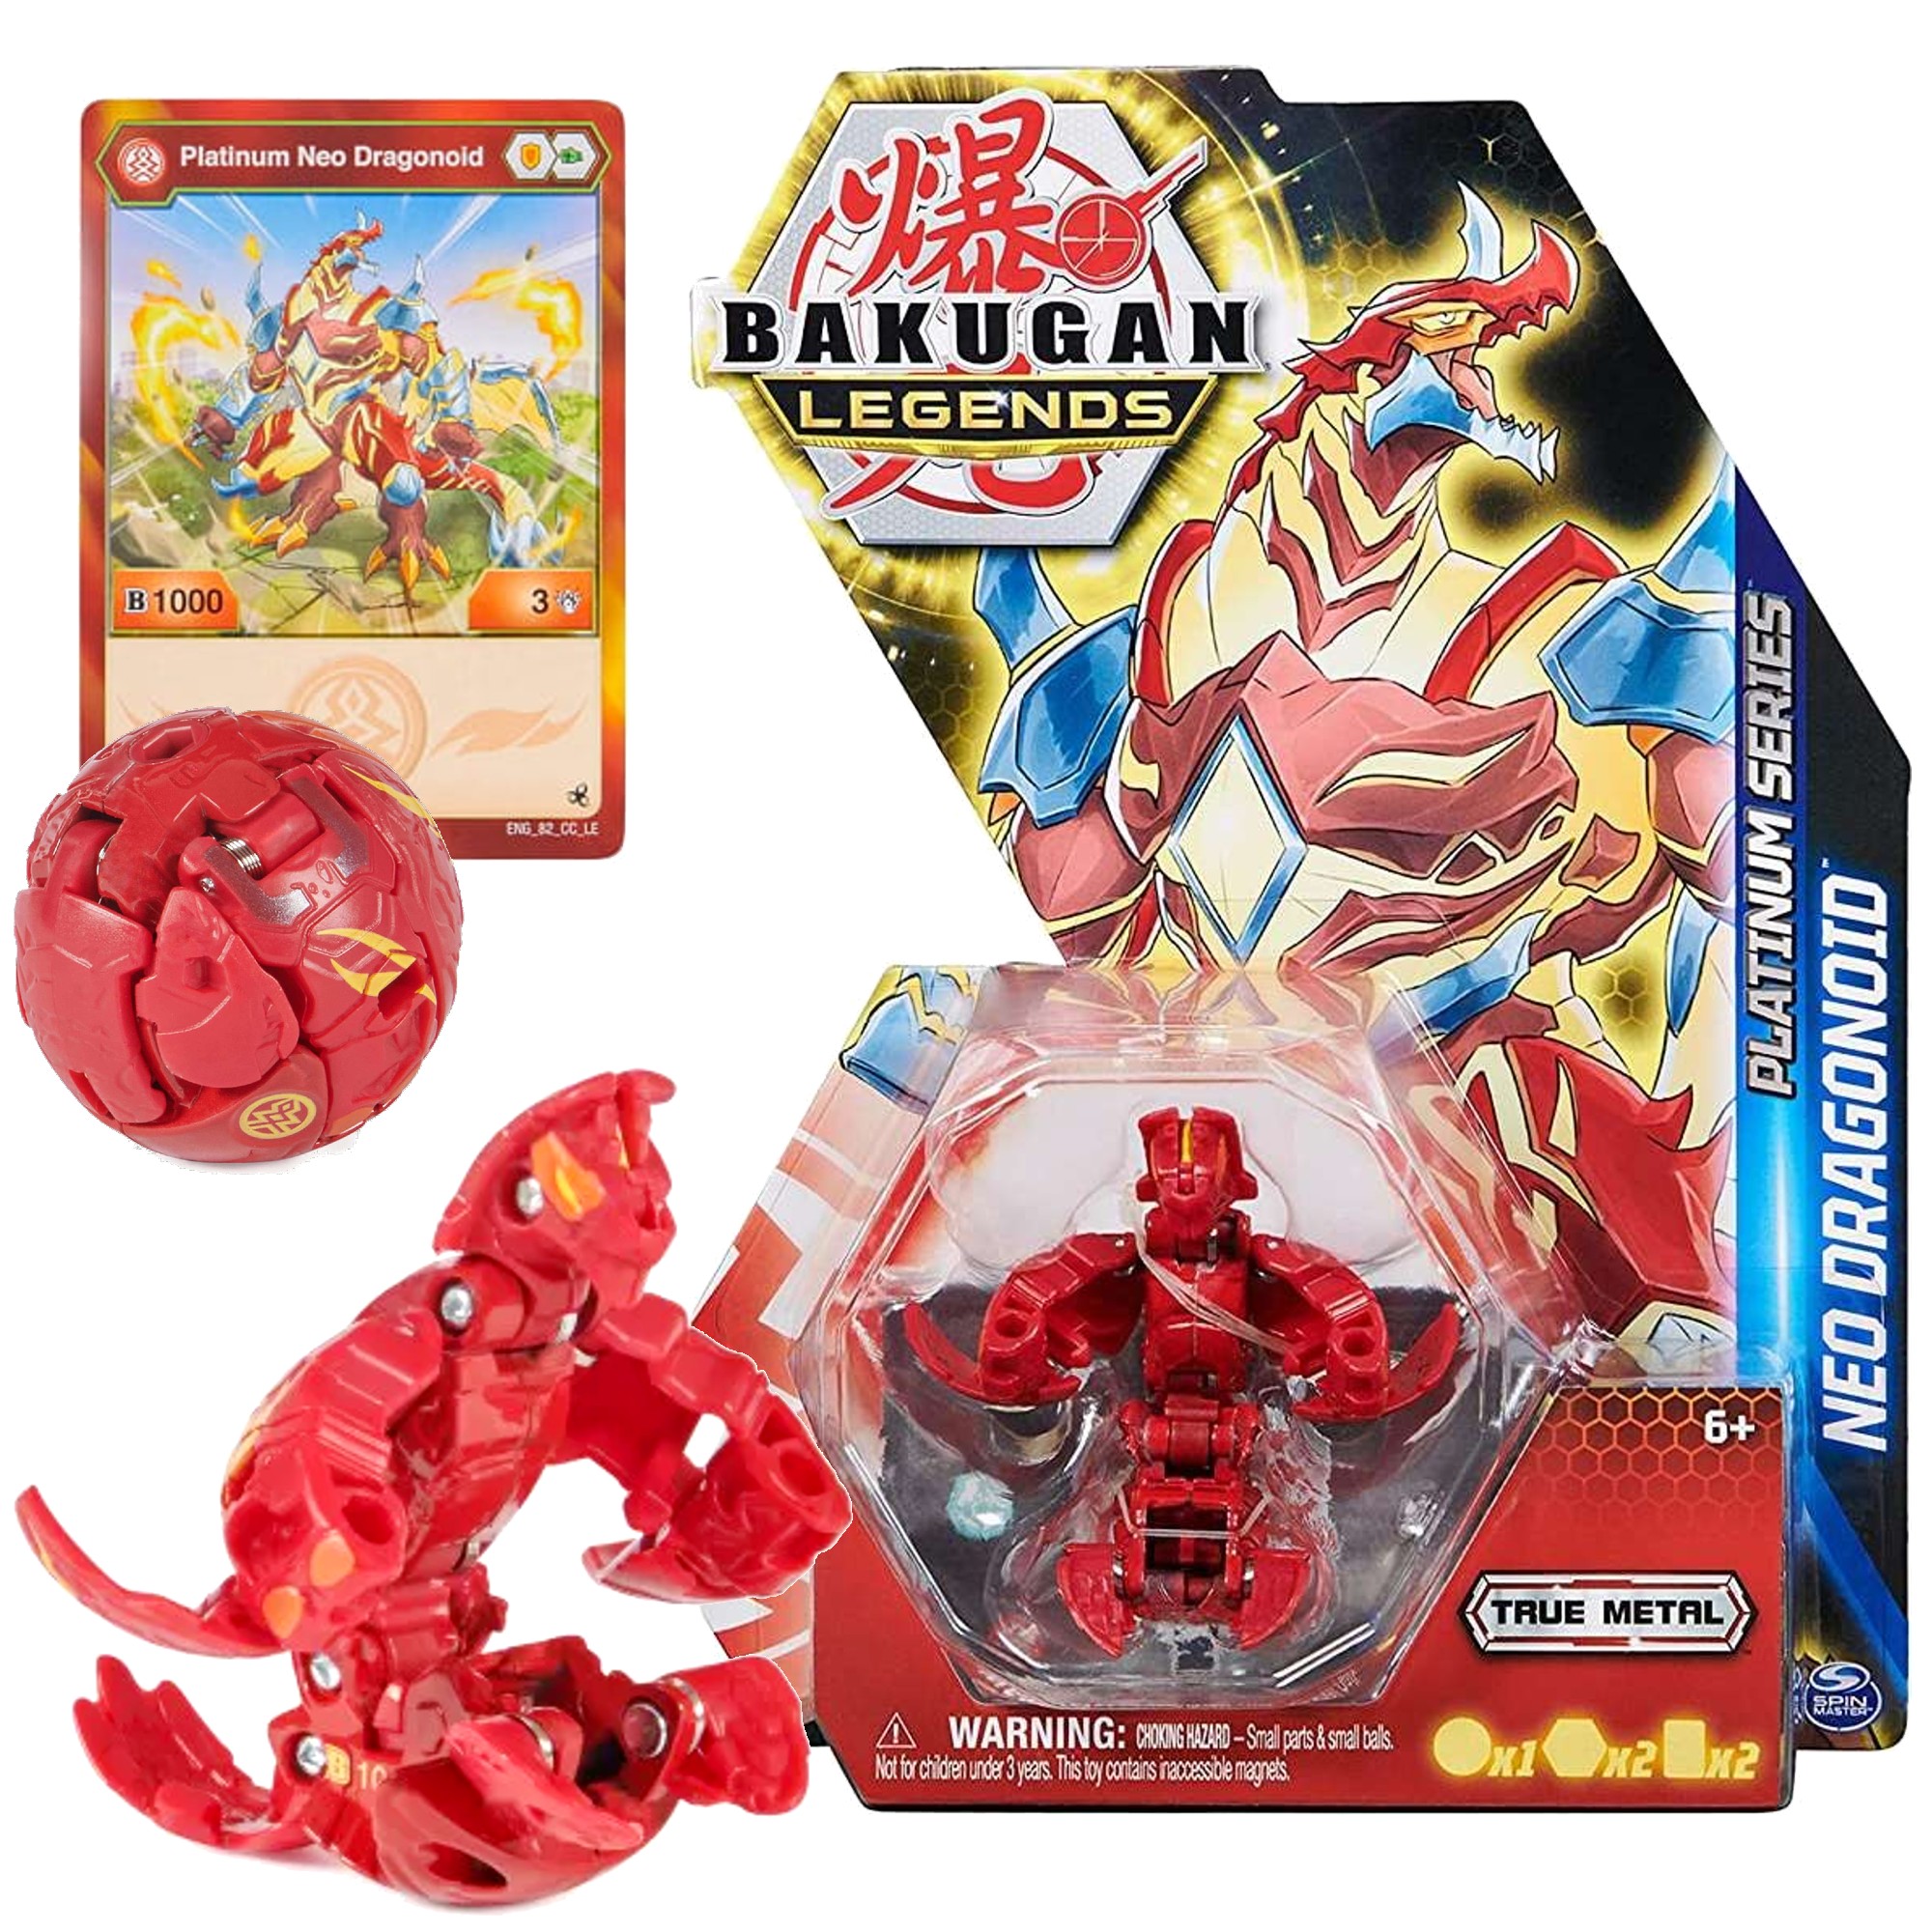 Bakugan Legends czerwona figurka kolekcjonerska Platinum Neo Dragonoid i karty 6+